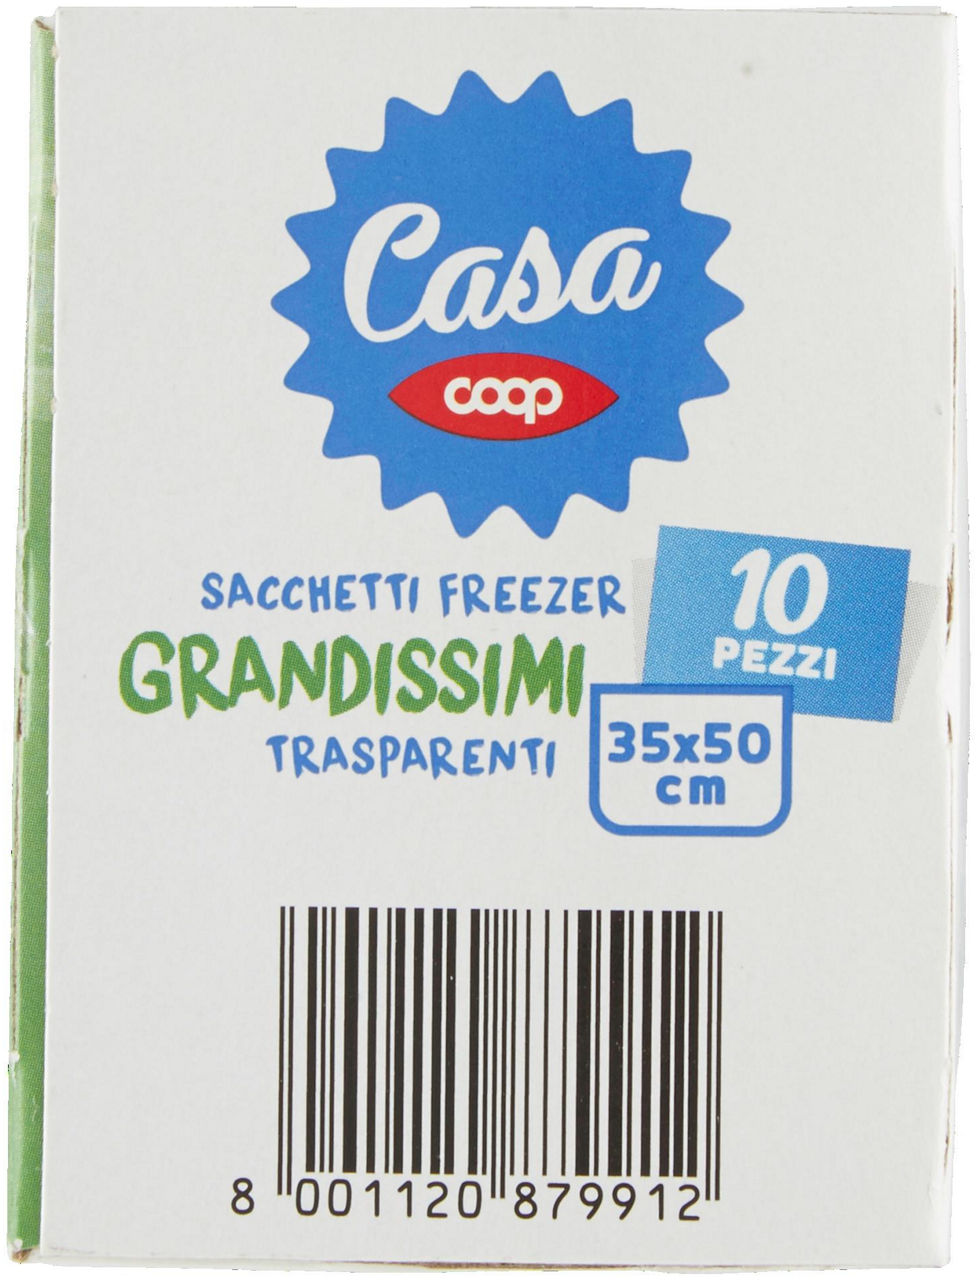 SACCHETTI FREEZER COOP CASA GRANDISSIMI CM.35X50 PZ.10 - 3